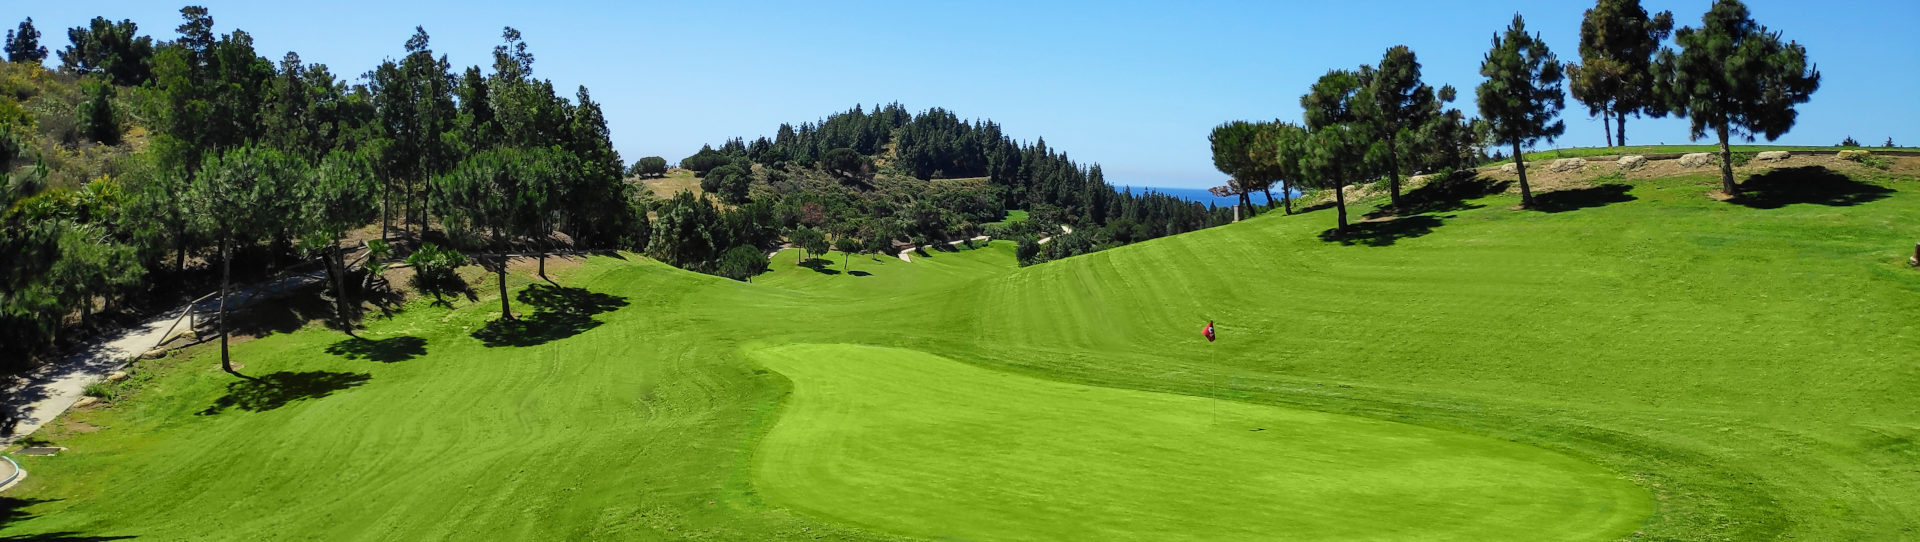 Spain golf courses - Chaparral Golf Course  - Photo 2